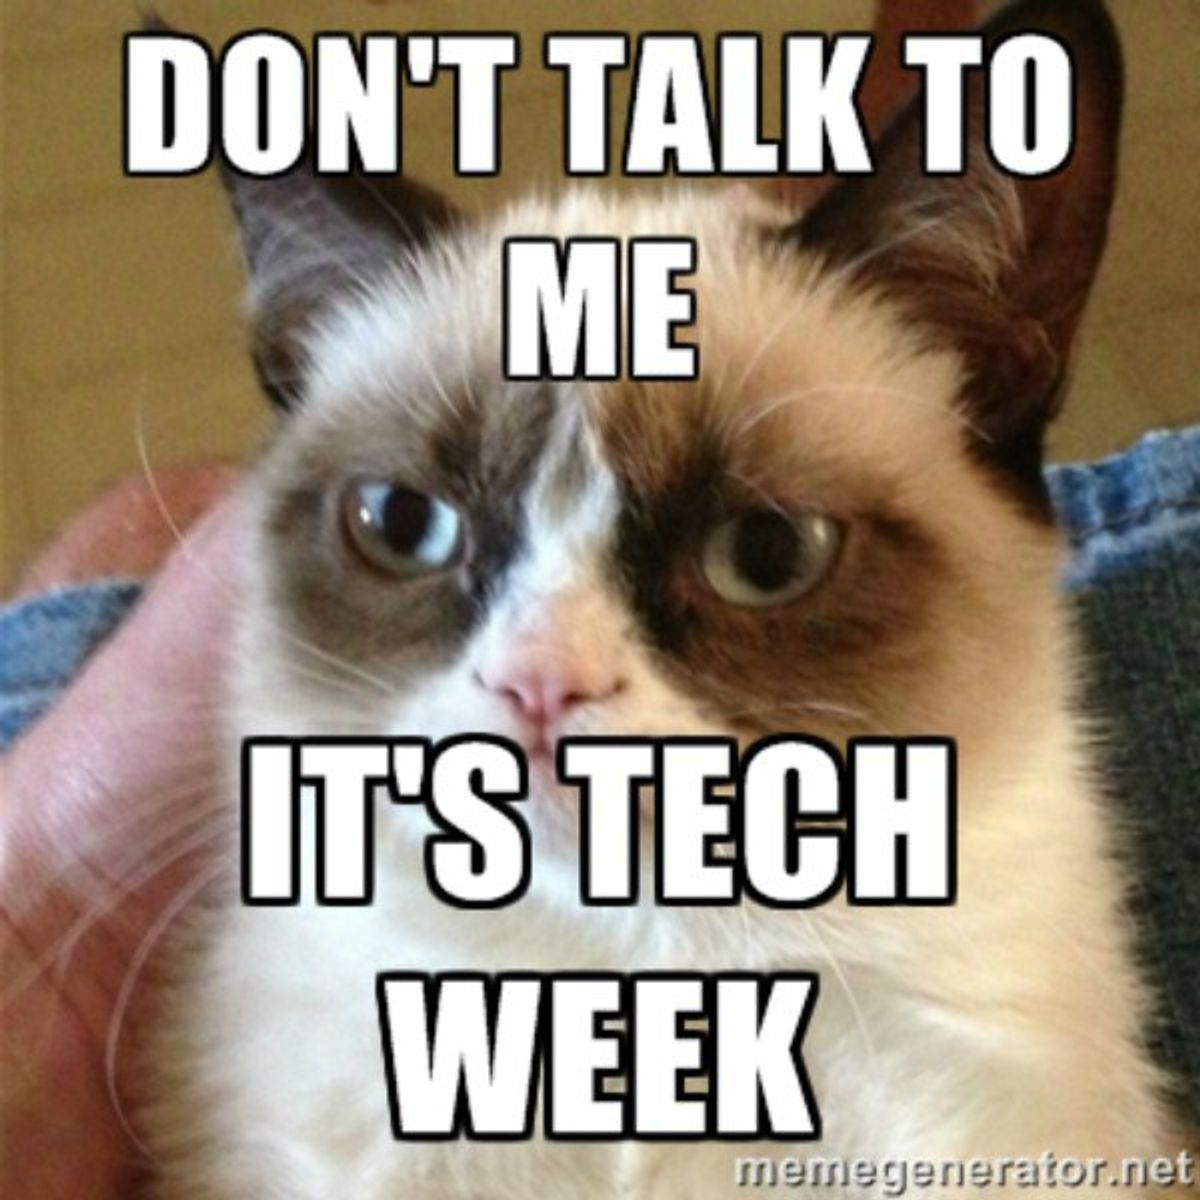 7 Reasons Why Tech Week is Actually Hell Week